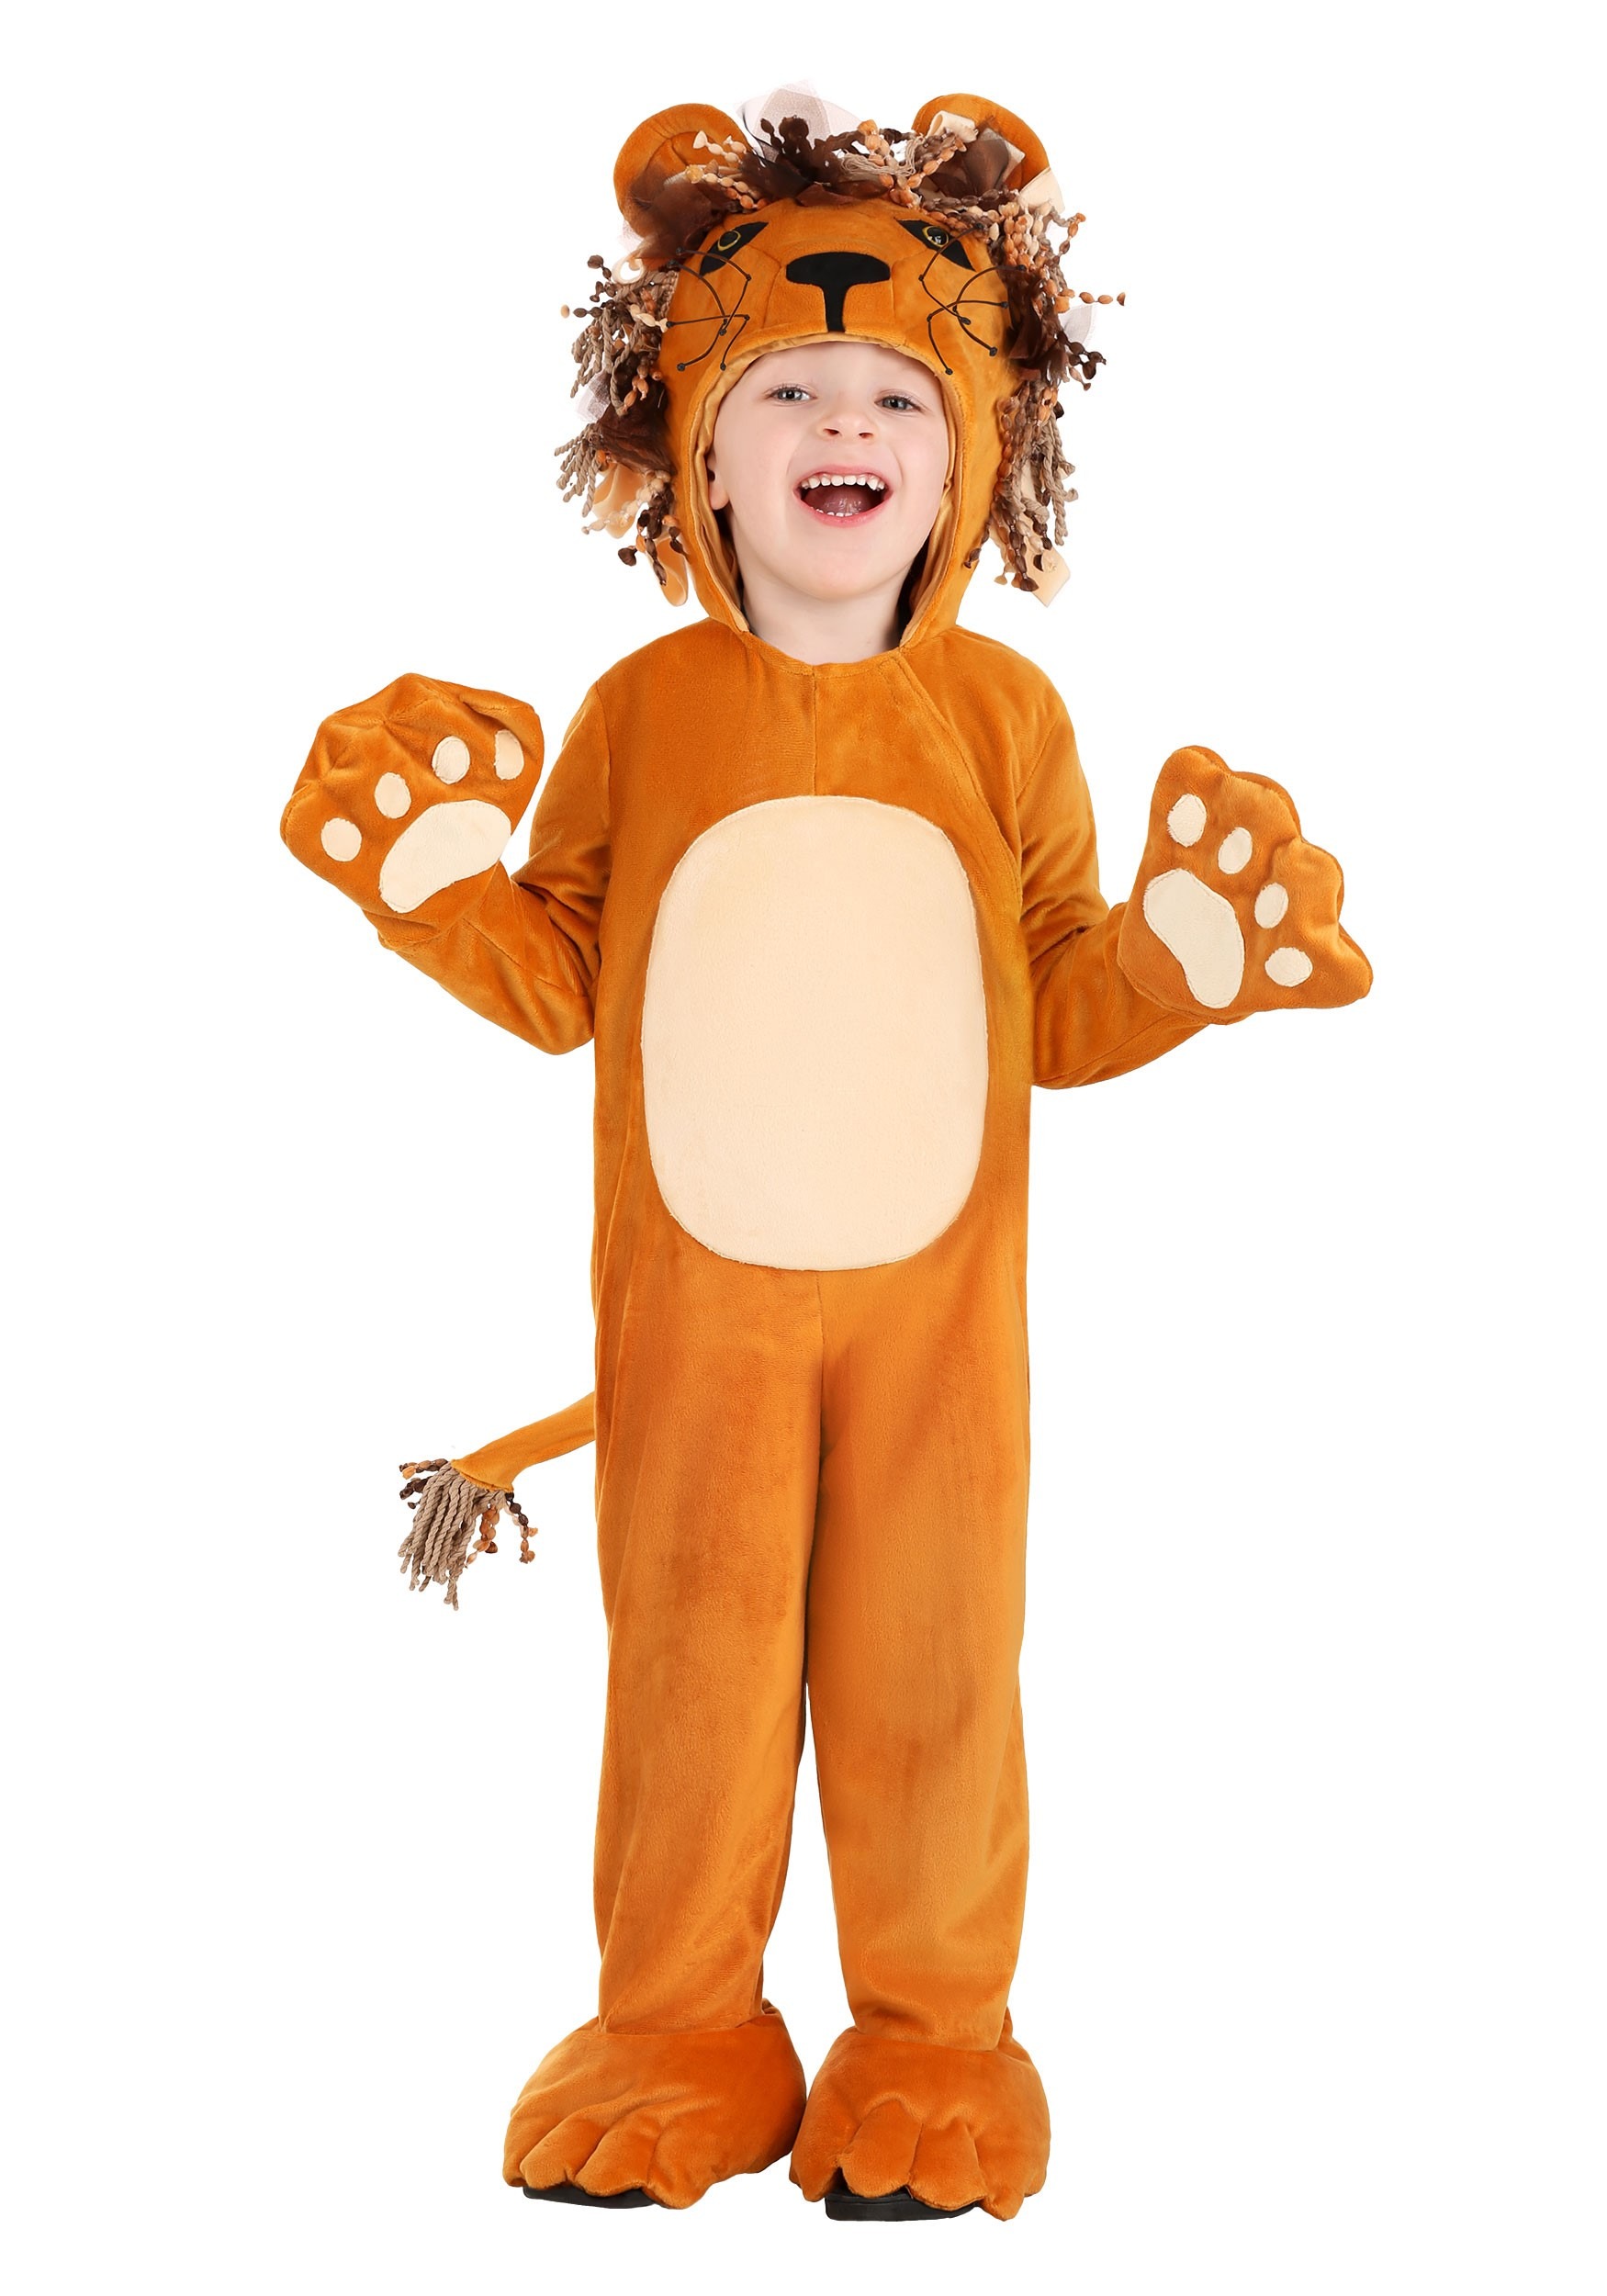 Roaring Lion Costume for Kids